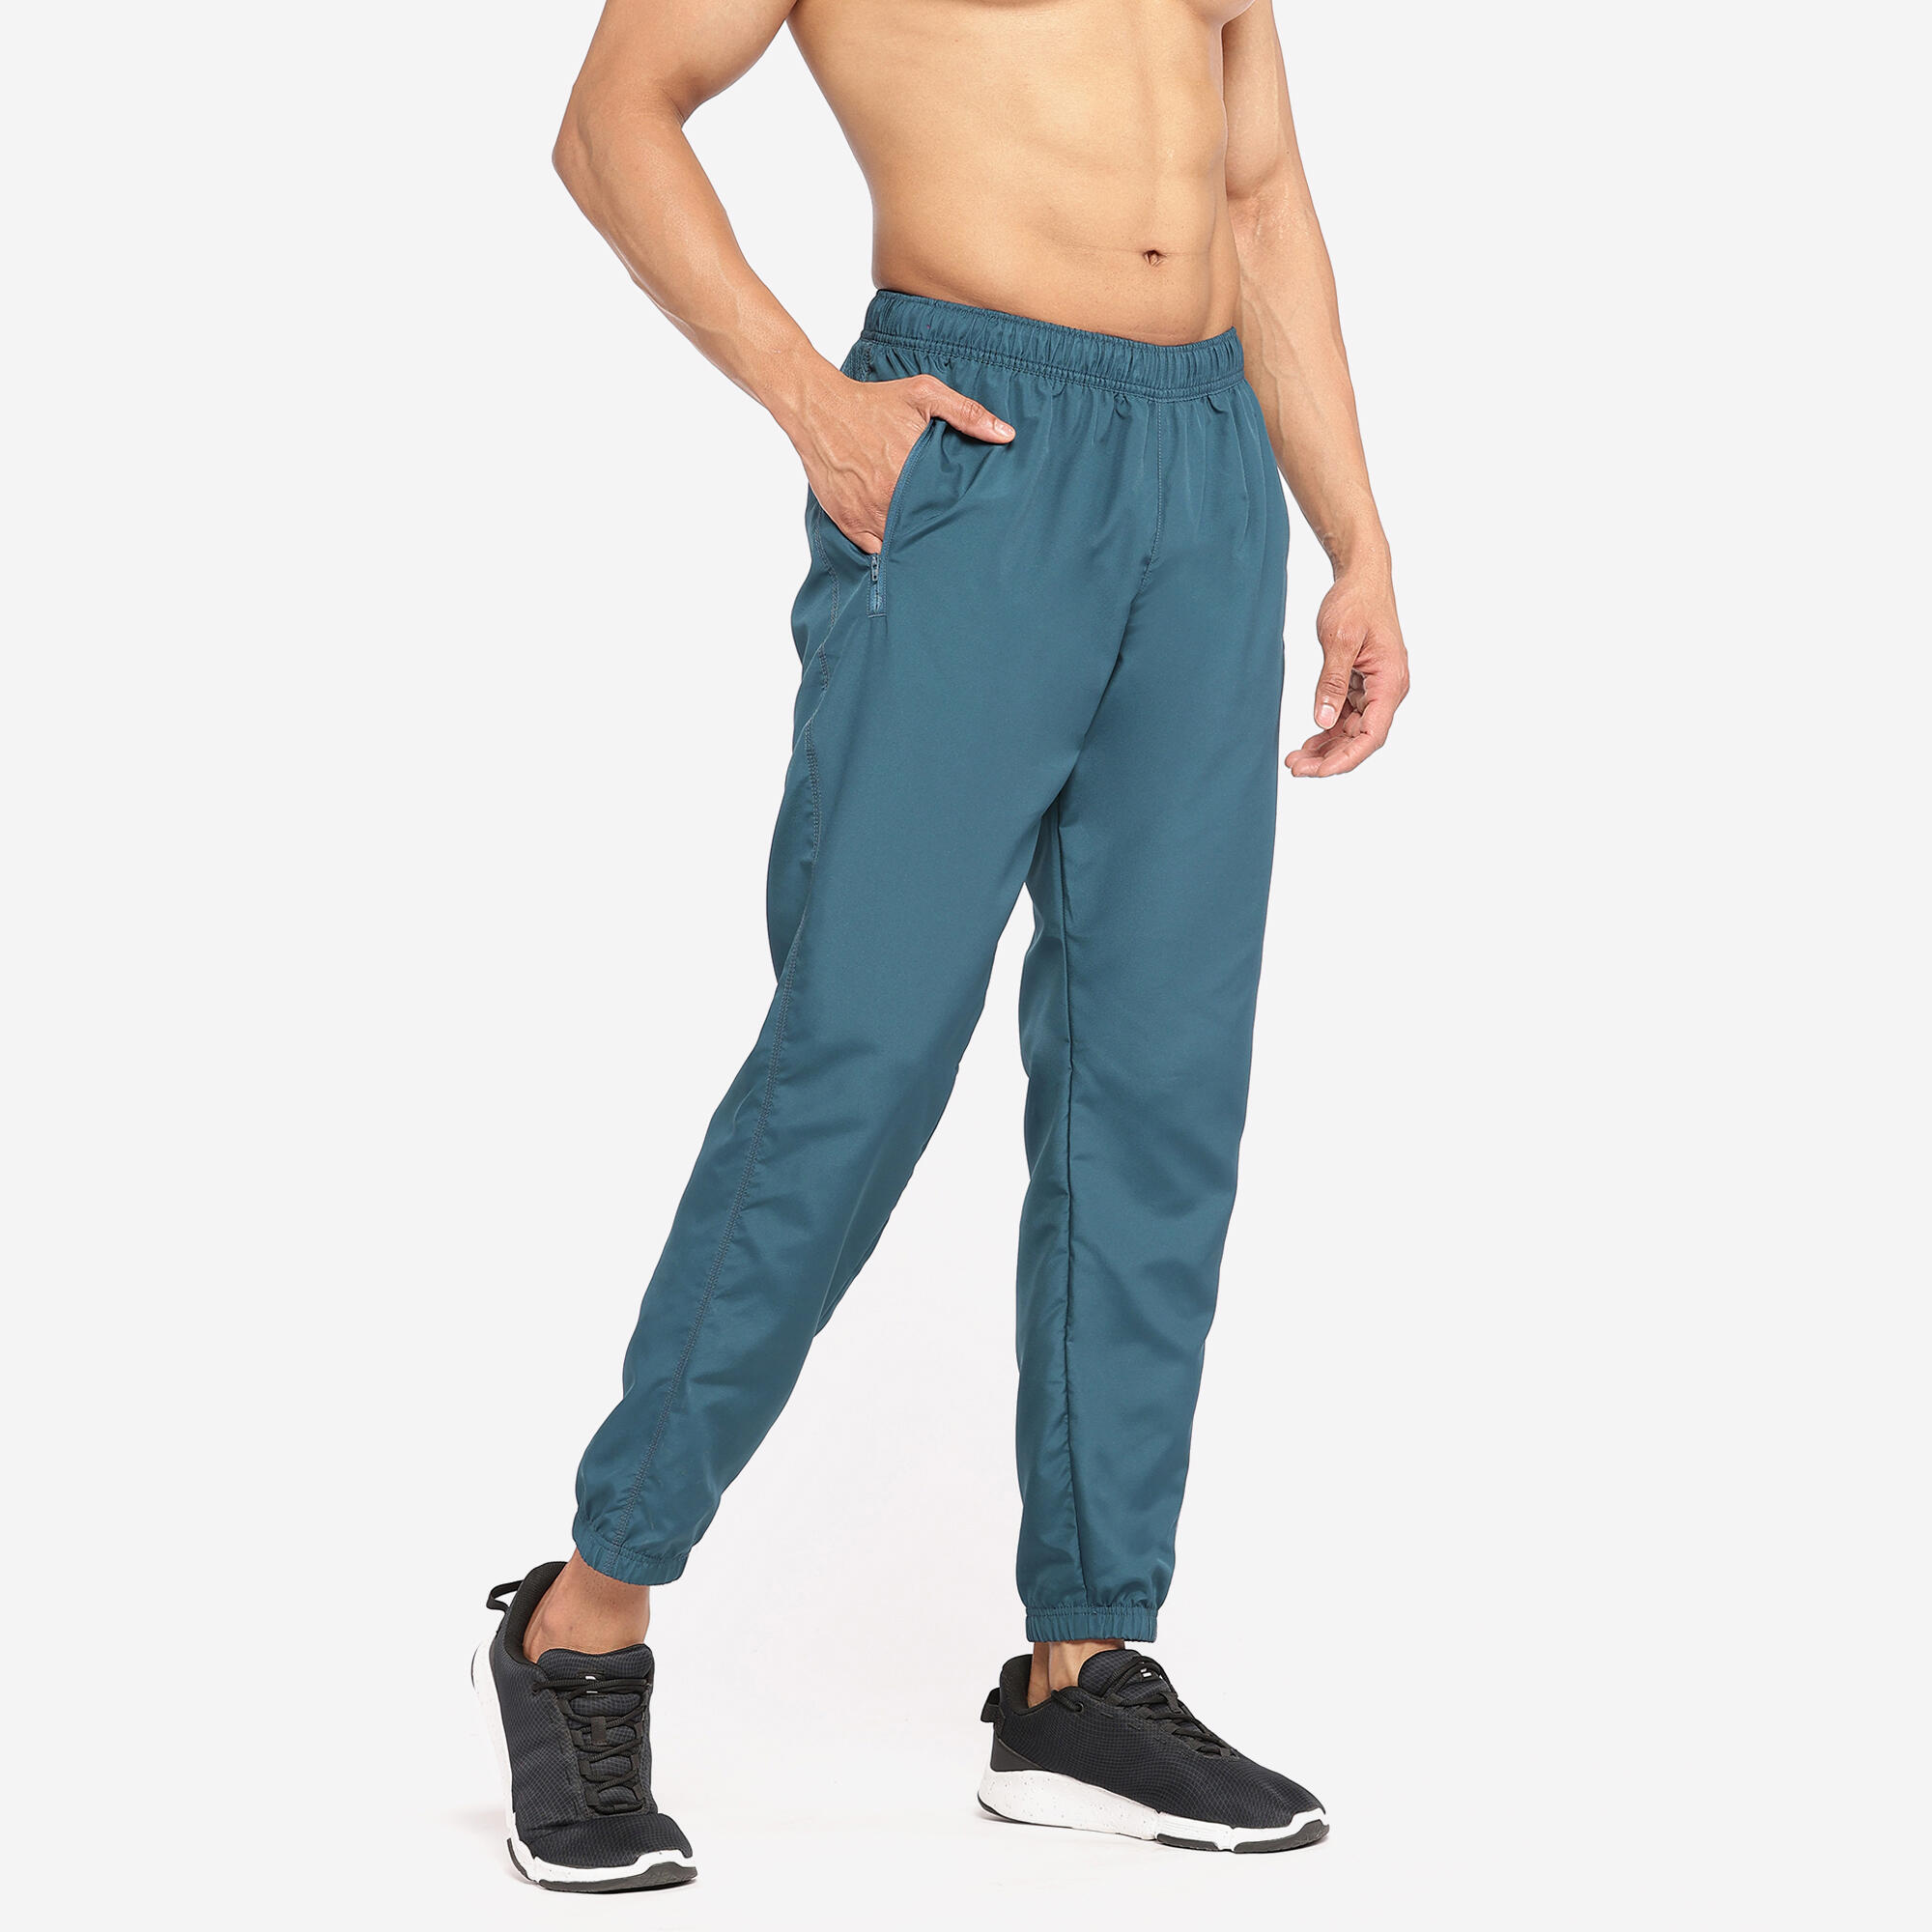 Dpassion 4 Way Lycra Regular fit Running Track Pants for Men/Boys | Lower  for Men Stylish